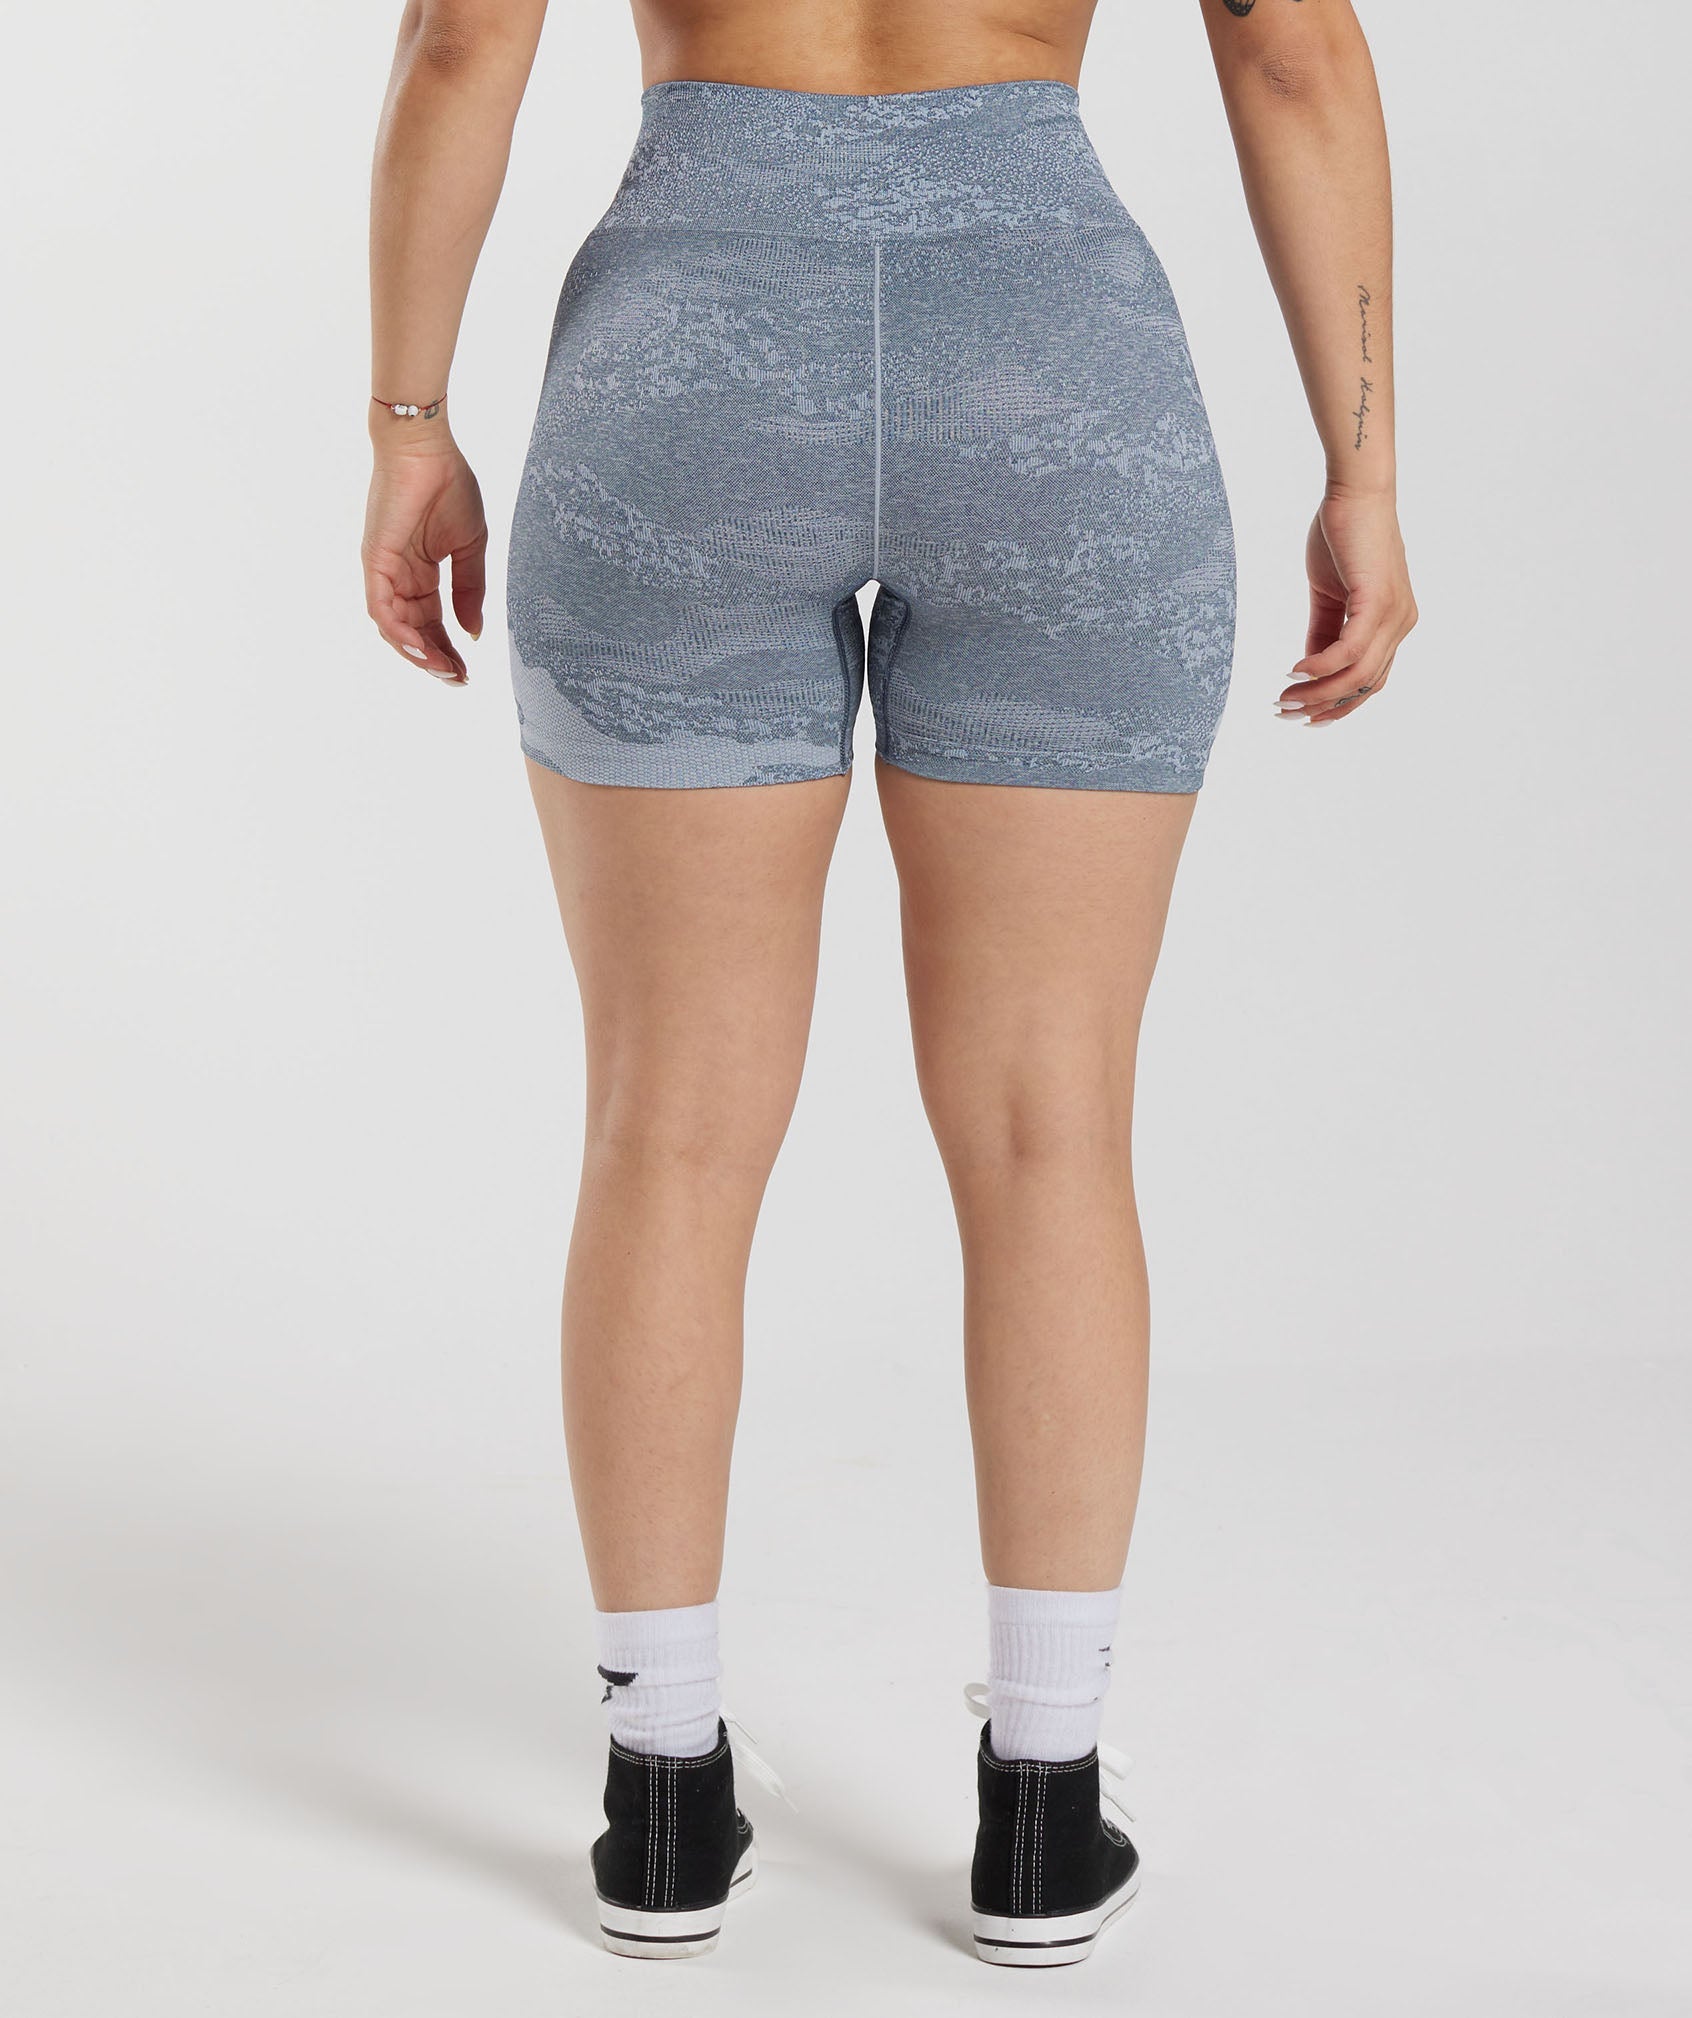 Adapt Camo Seamless Shorts in Stone Grey/Evening Blue